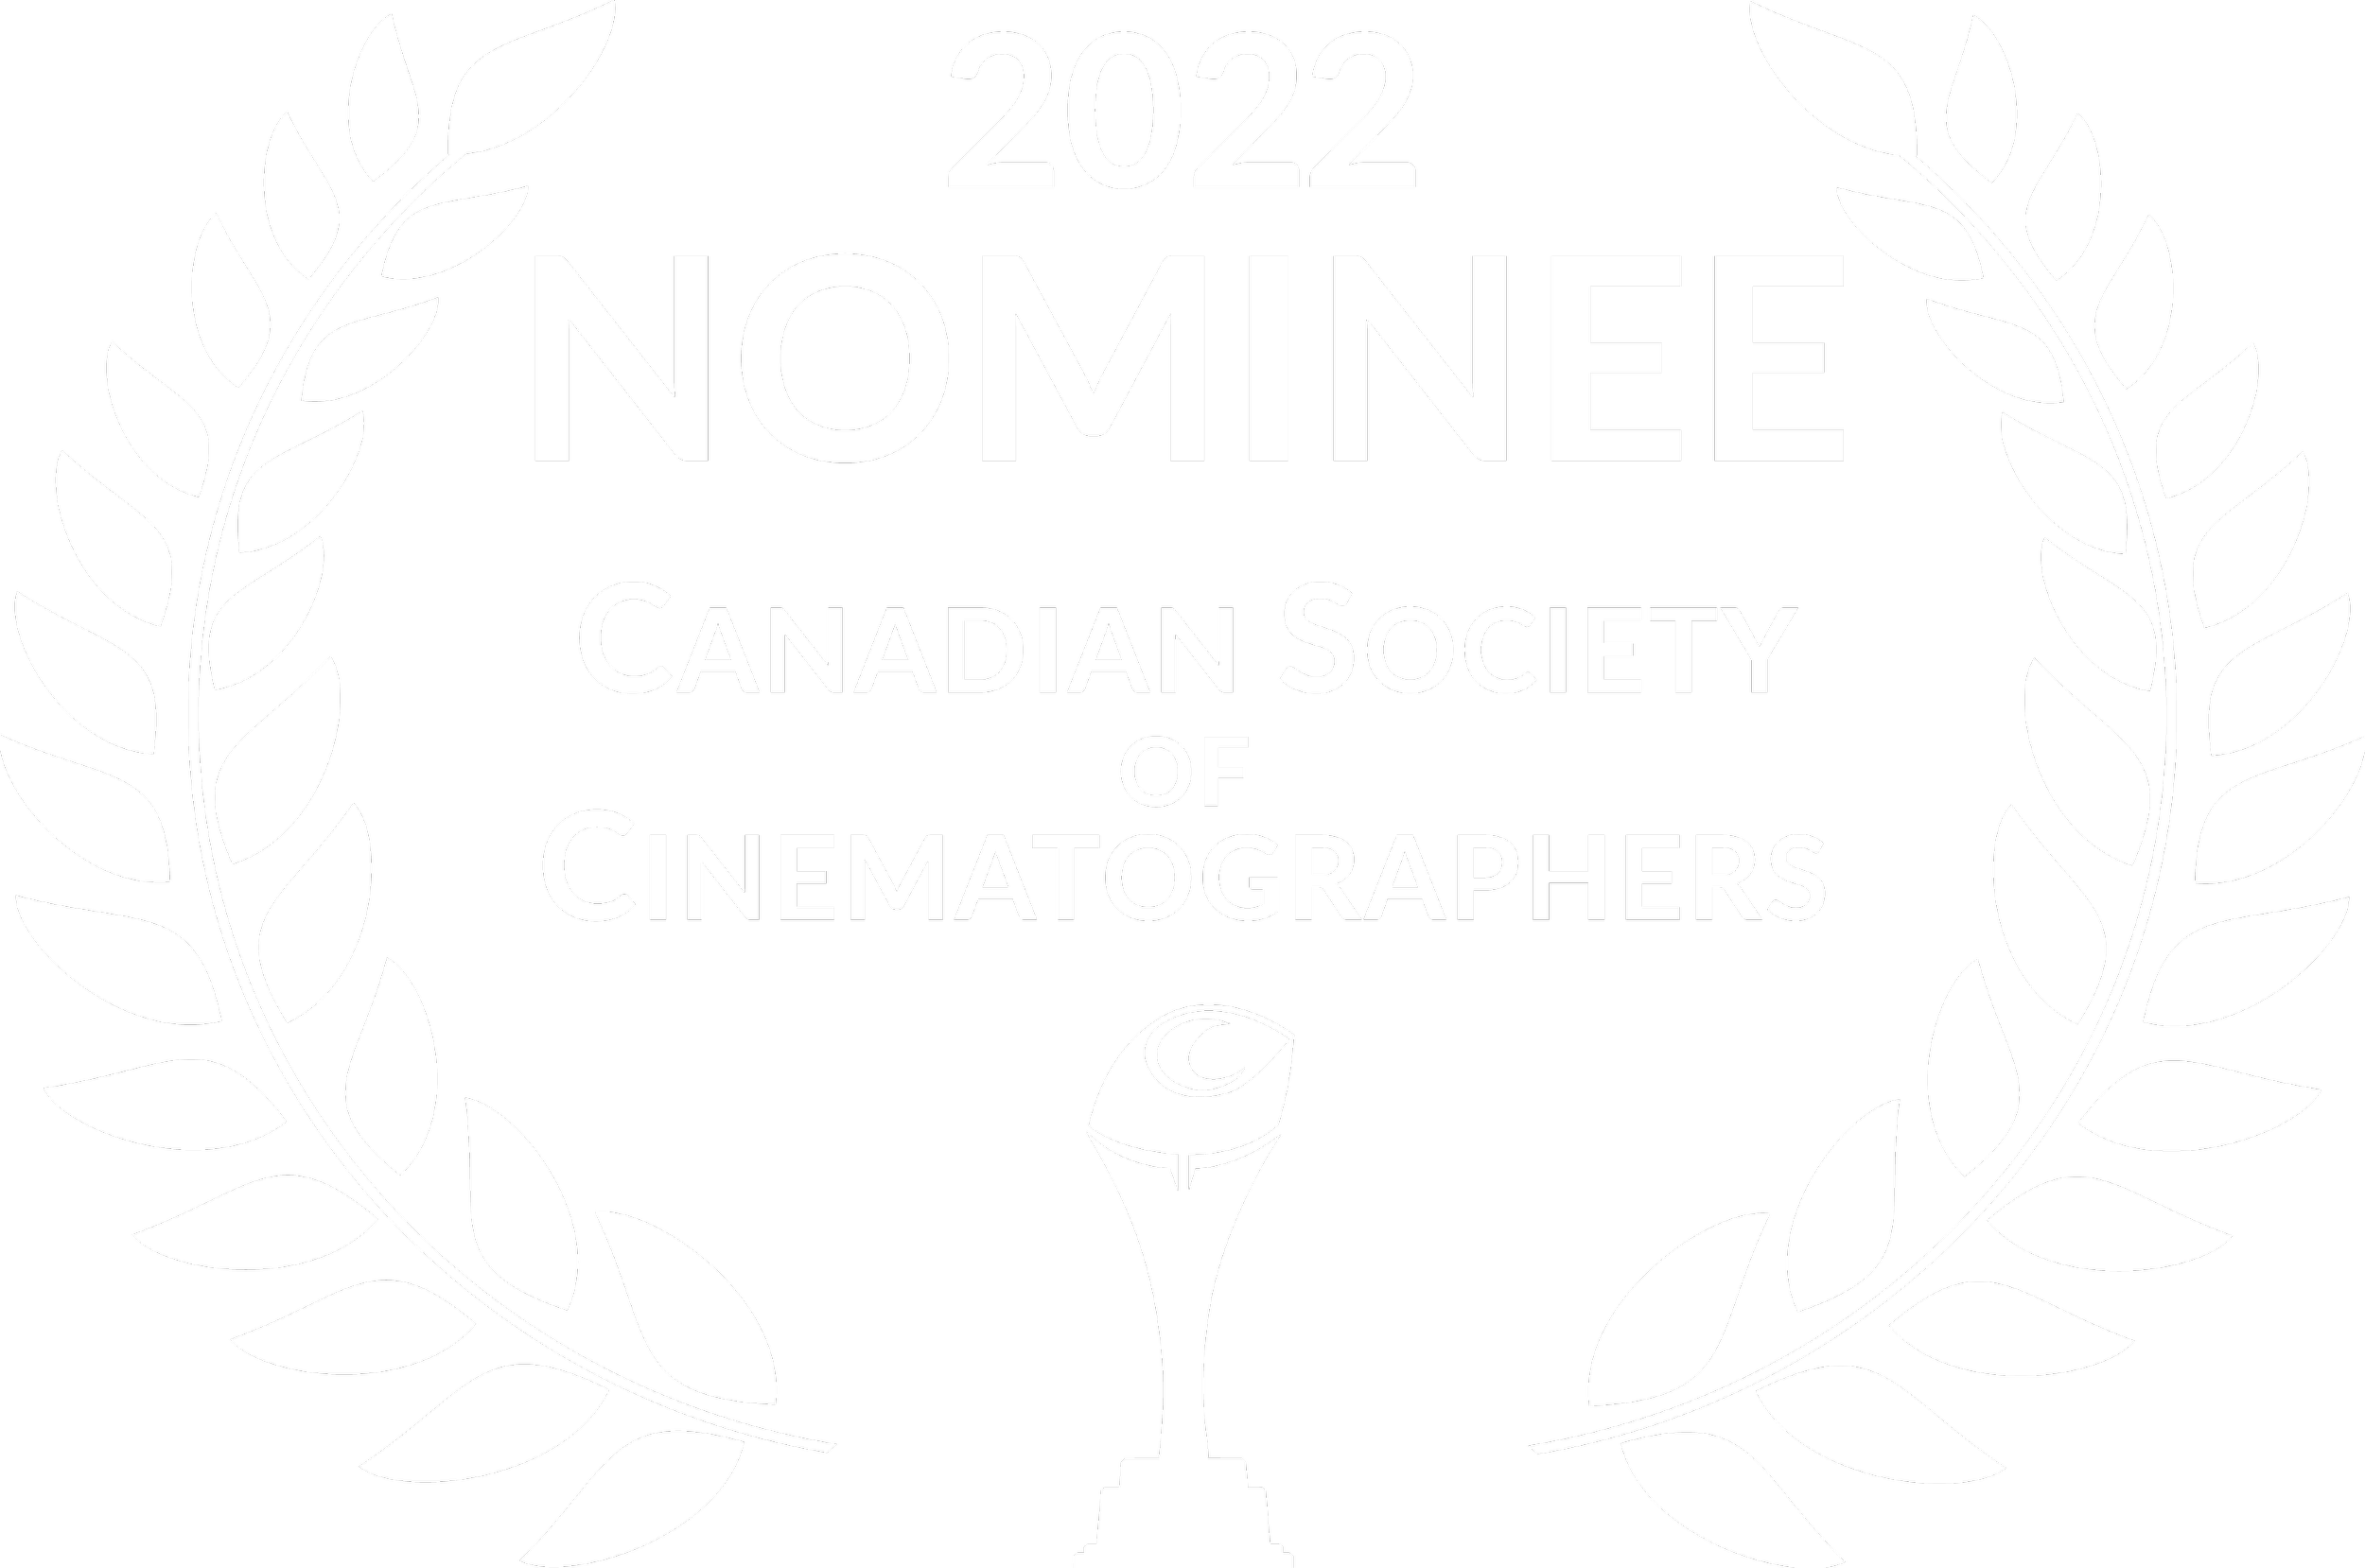 Canadian Society of cinematographers nominee laurel